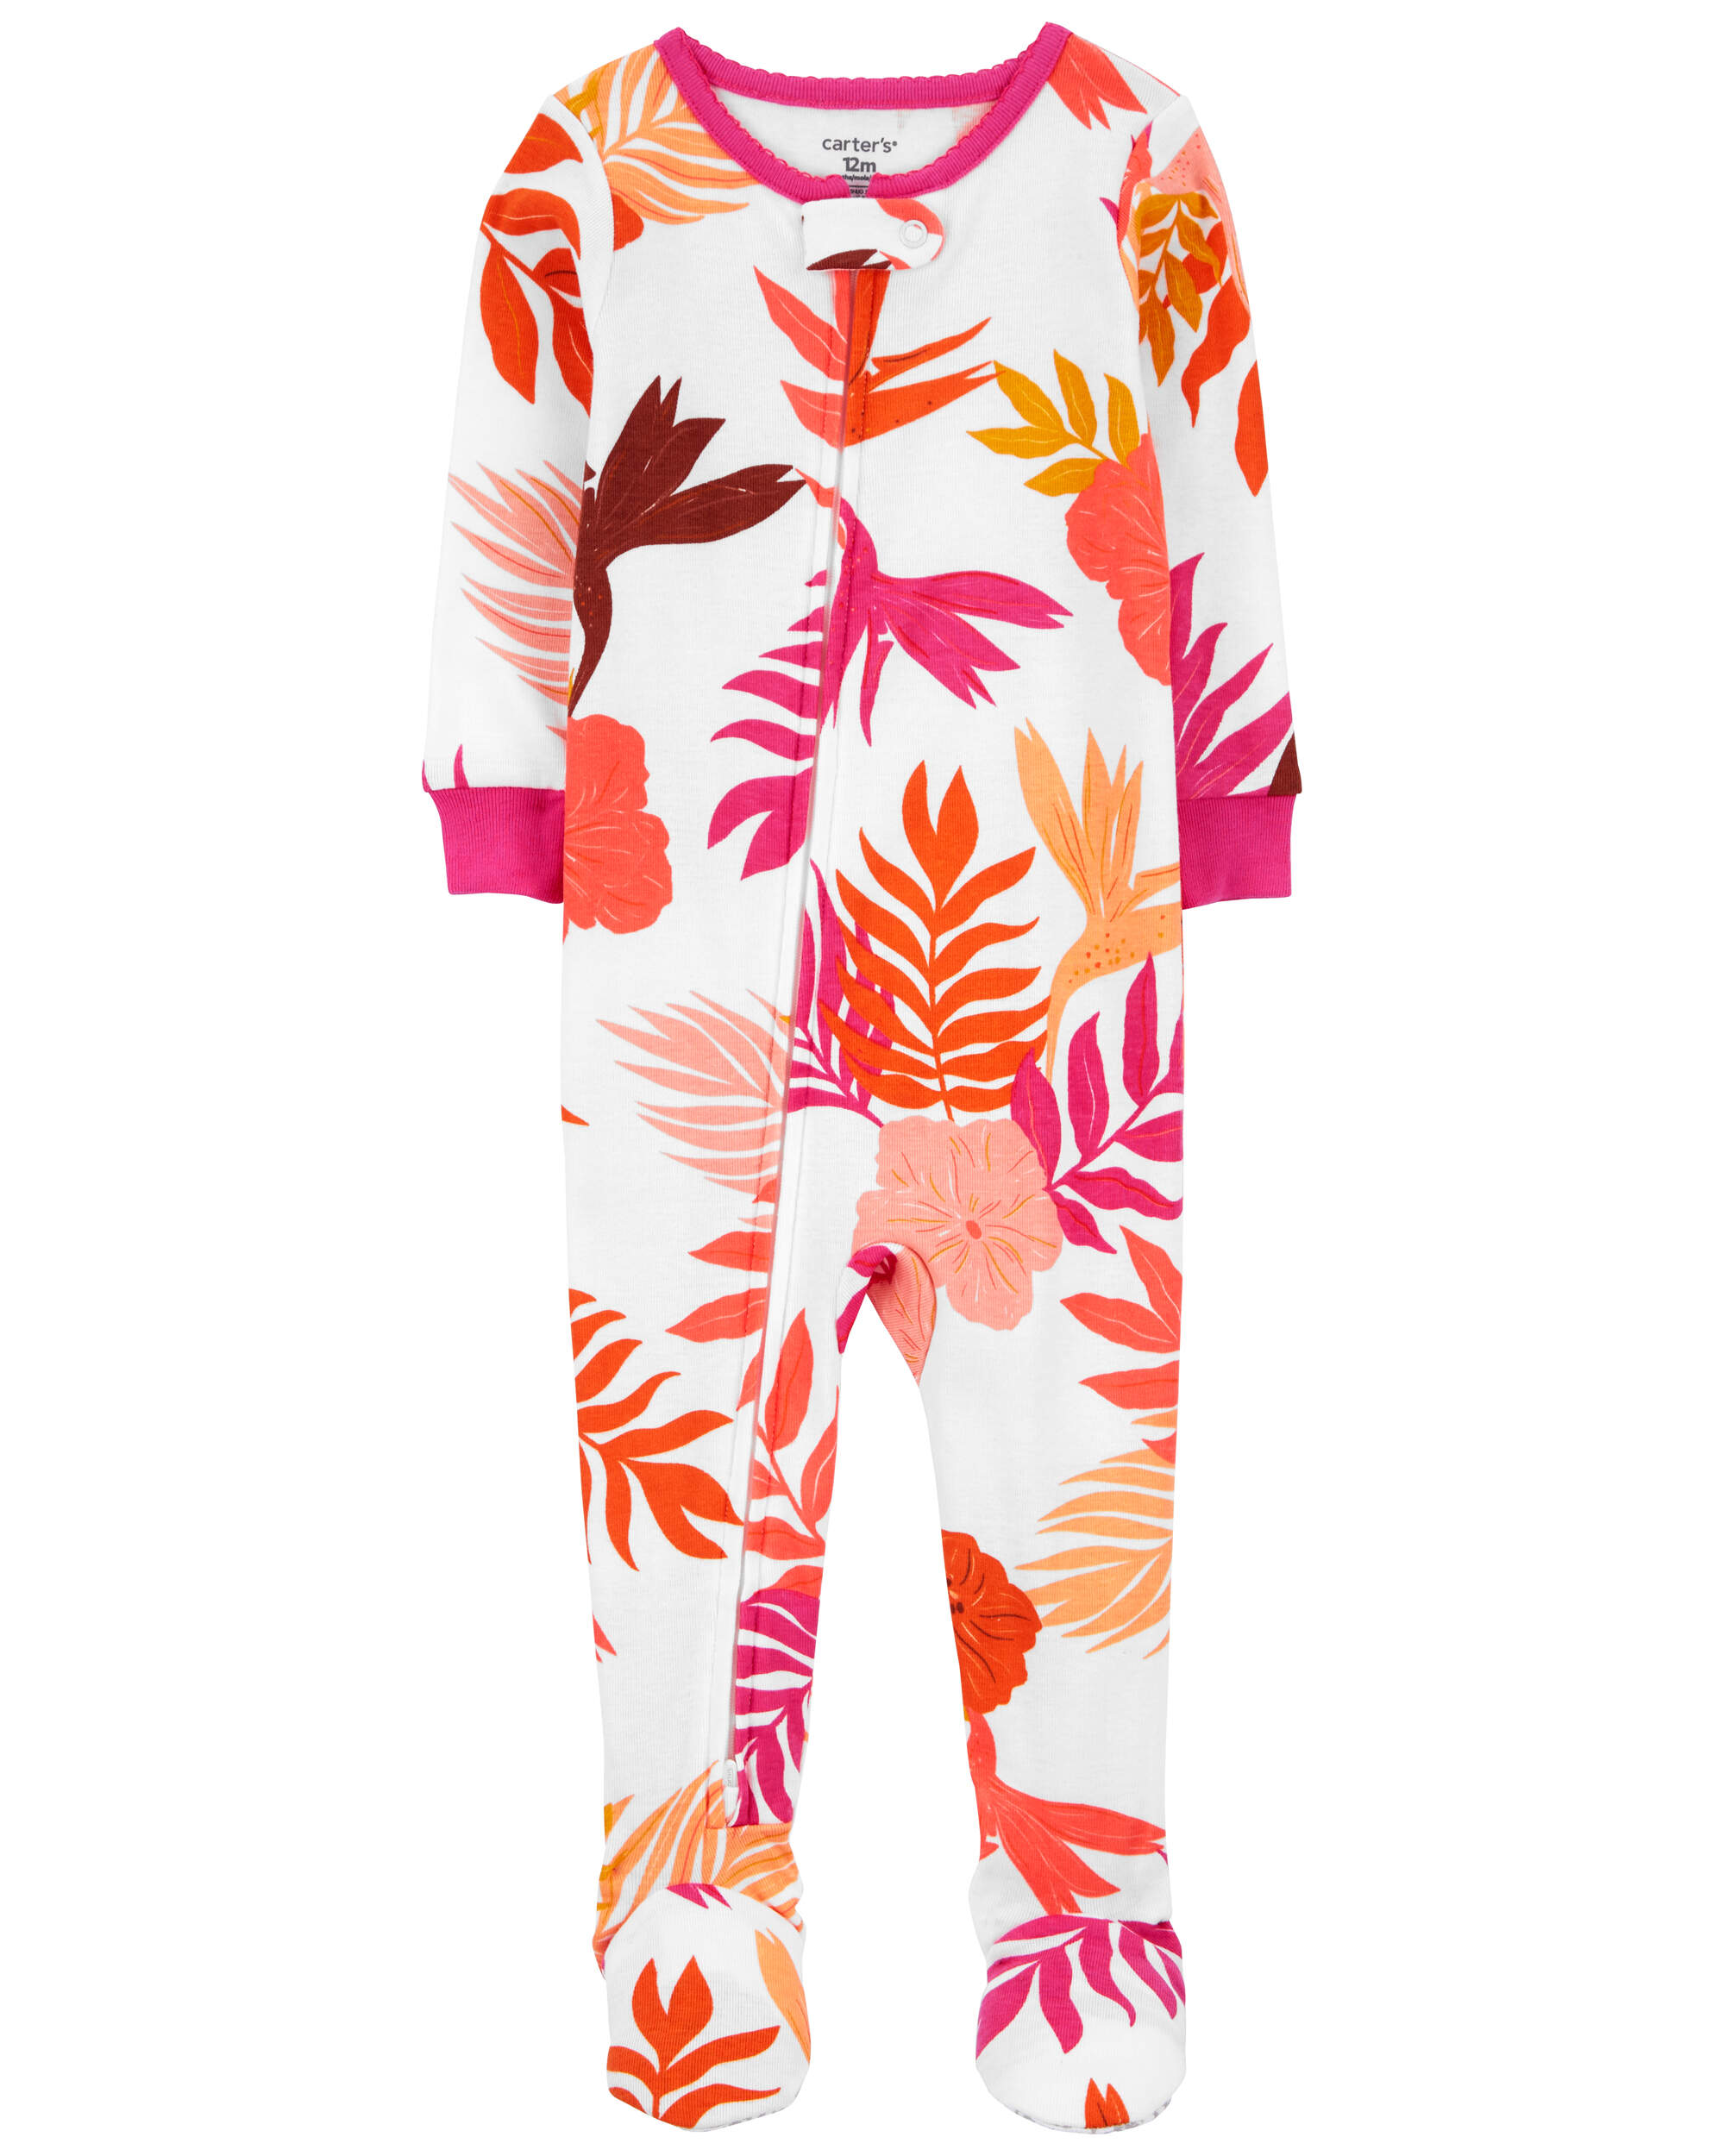 Toddler 1-Piece Floral 100% Snug Fit Cotton Footie Pyjamas